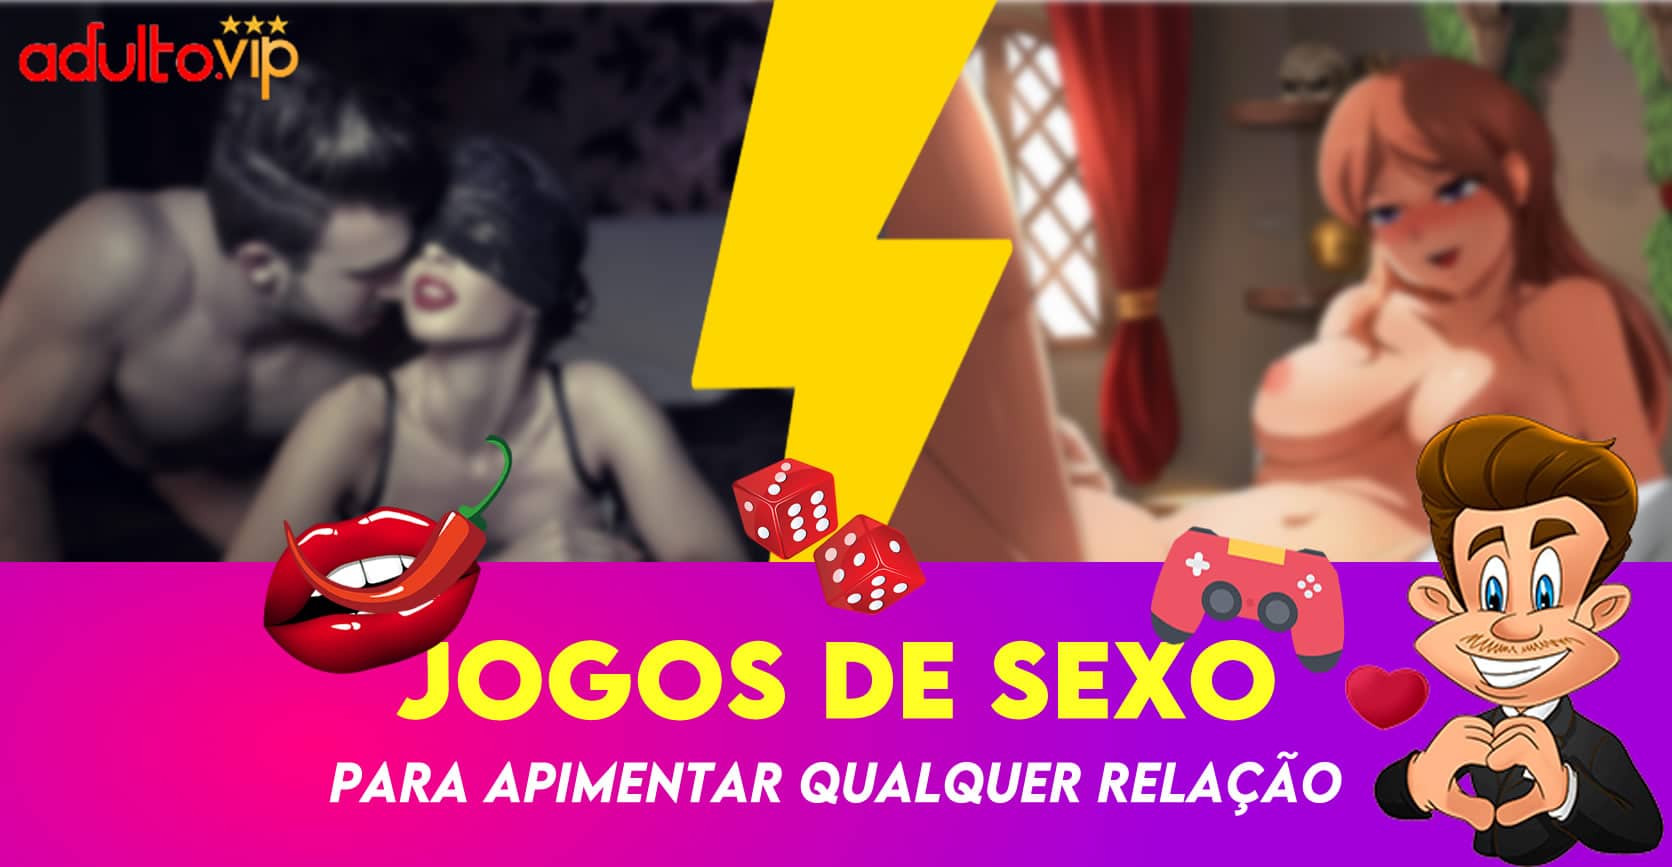 Jogos de sexo portugues